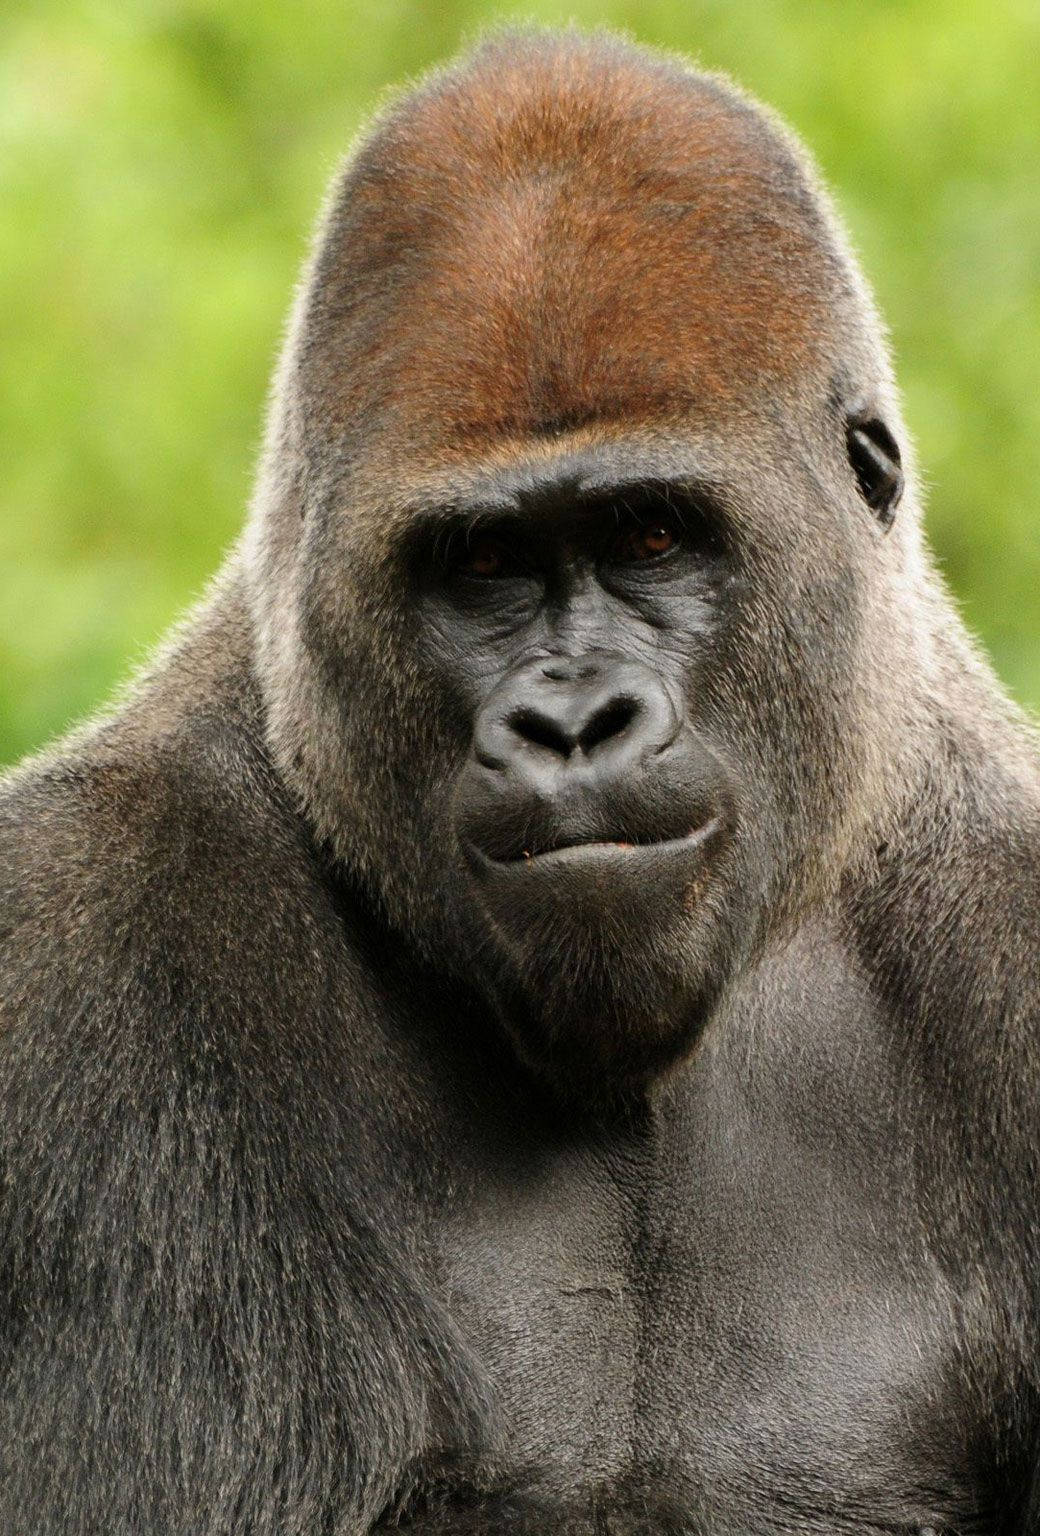 Serious-looking Gorilla Iphone Wallpaper